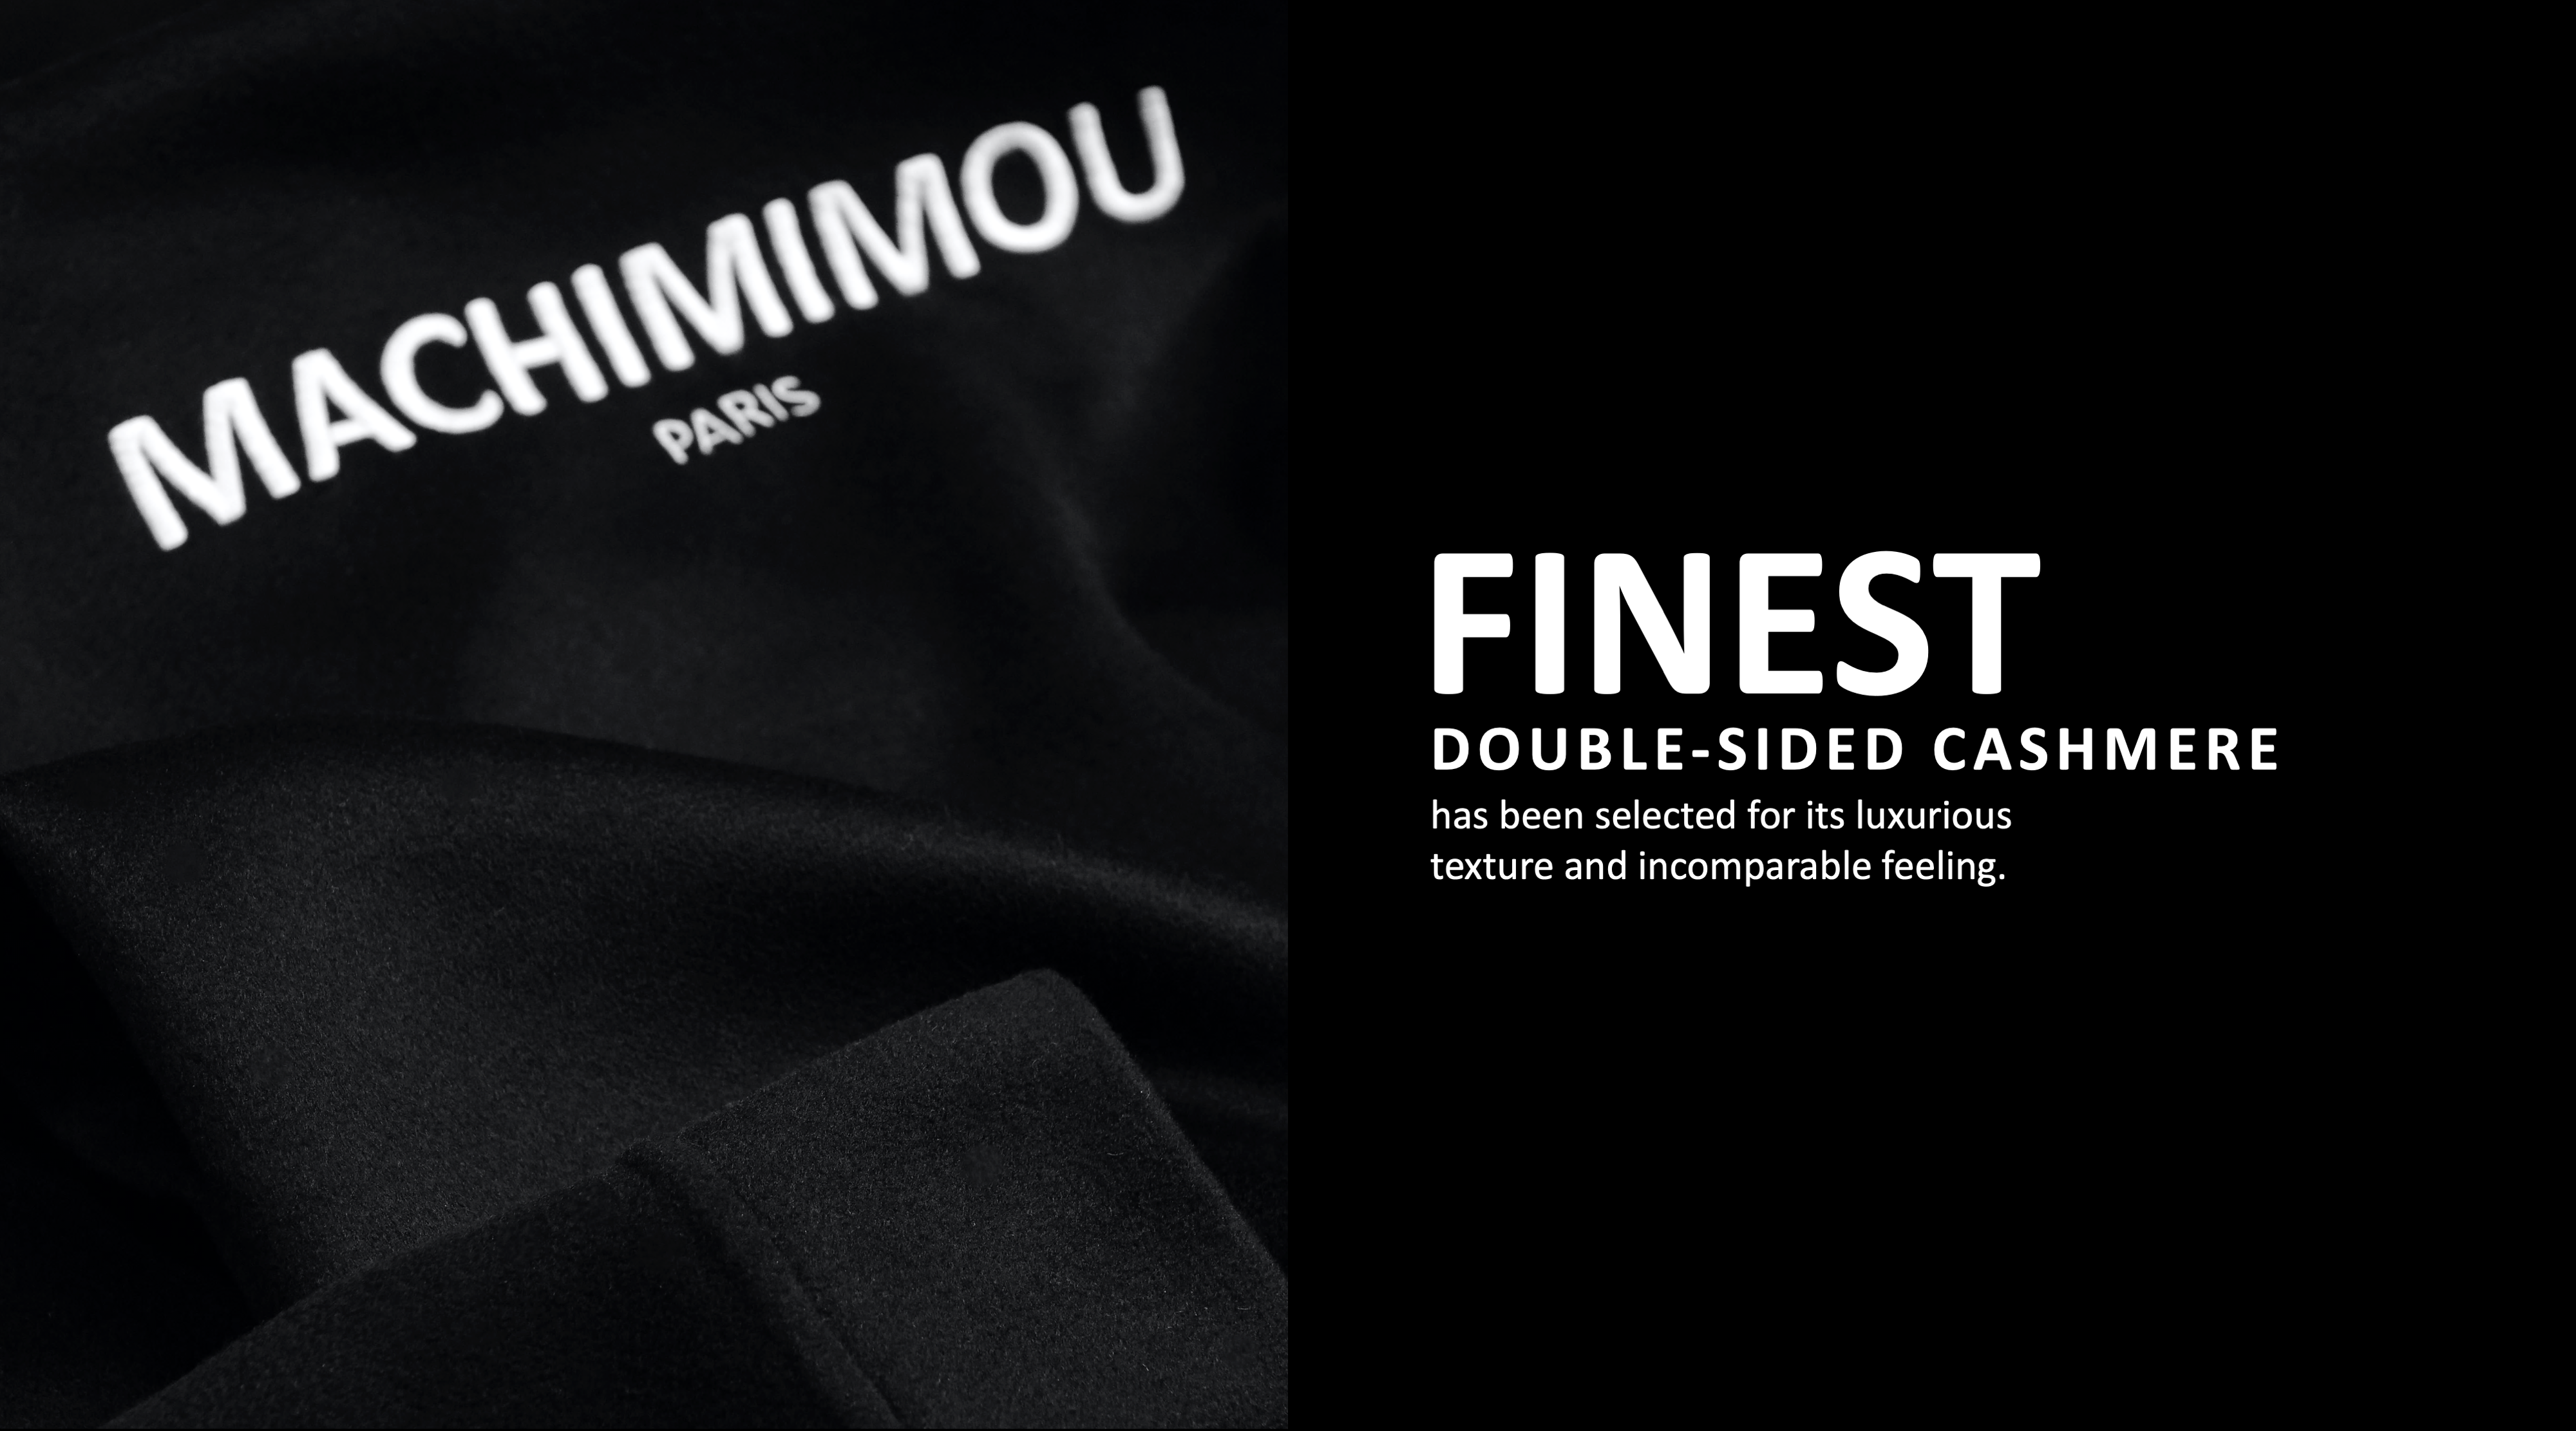 MACHIMIMOU PARIS - Finest Double-Sided Cashmere